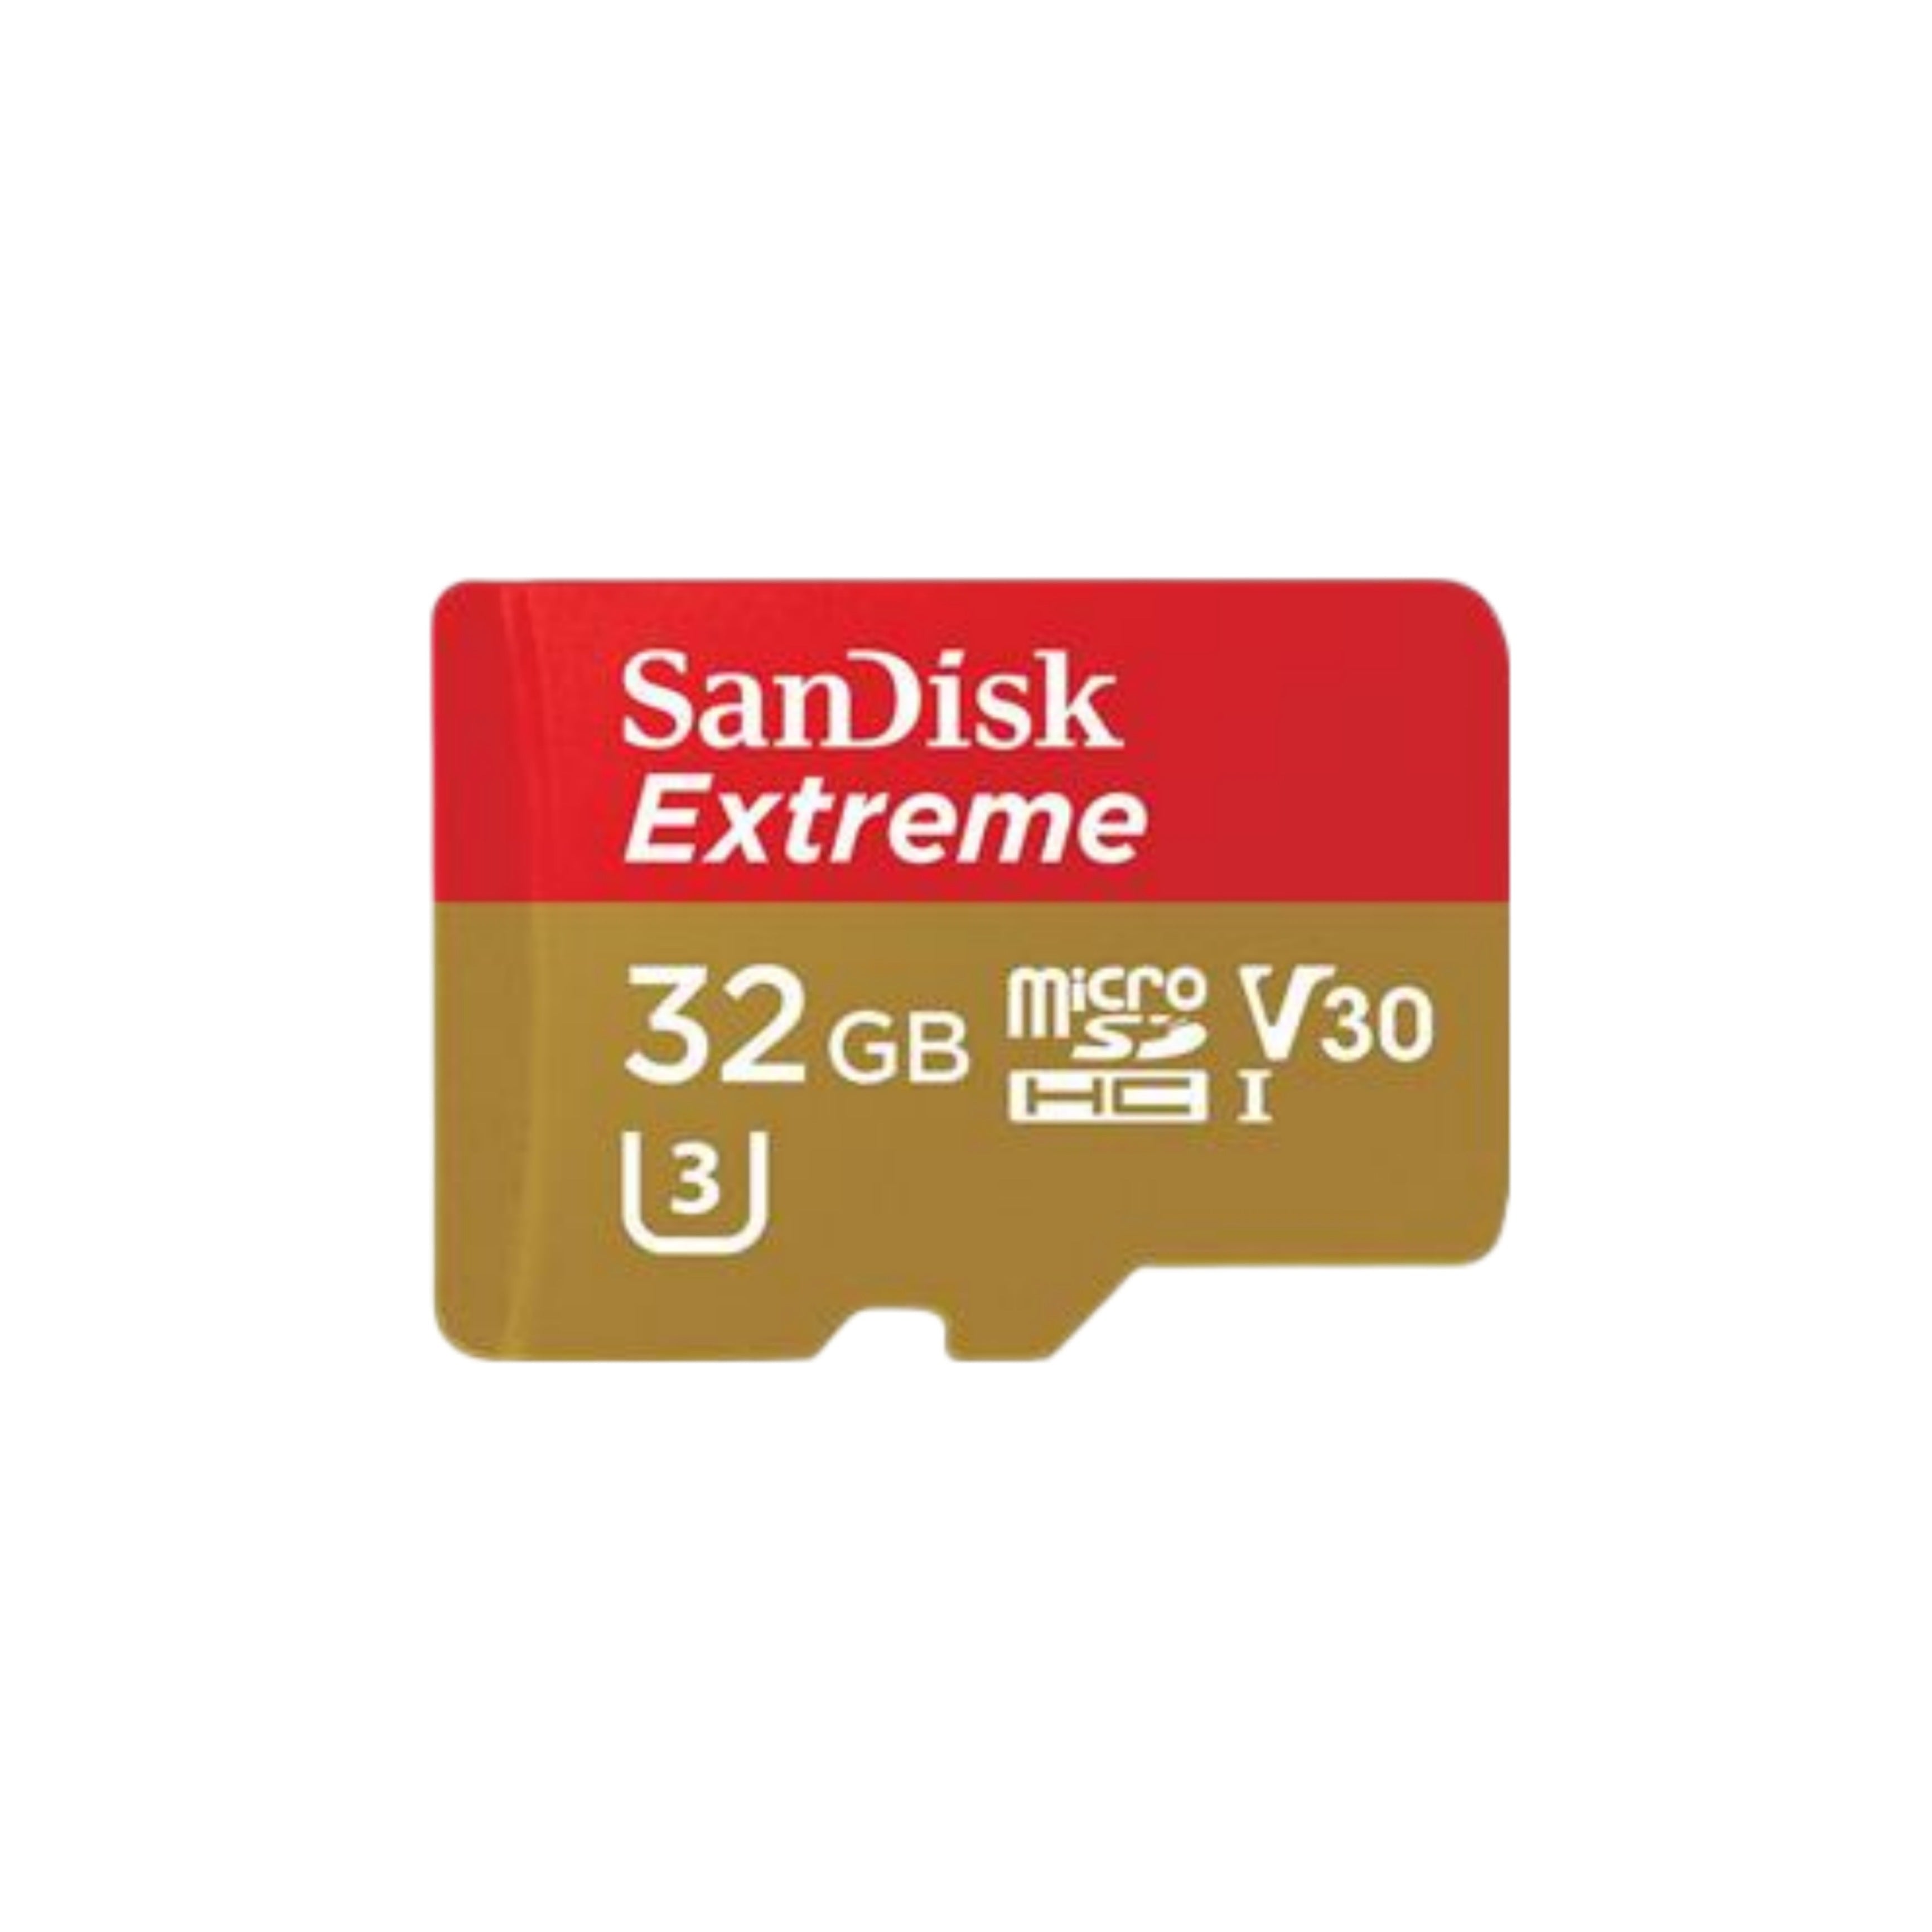 SanDisk 32GB UHS-I microSDHC U3